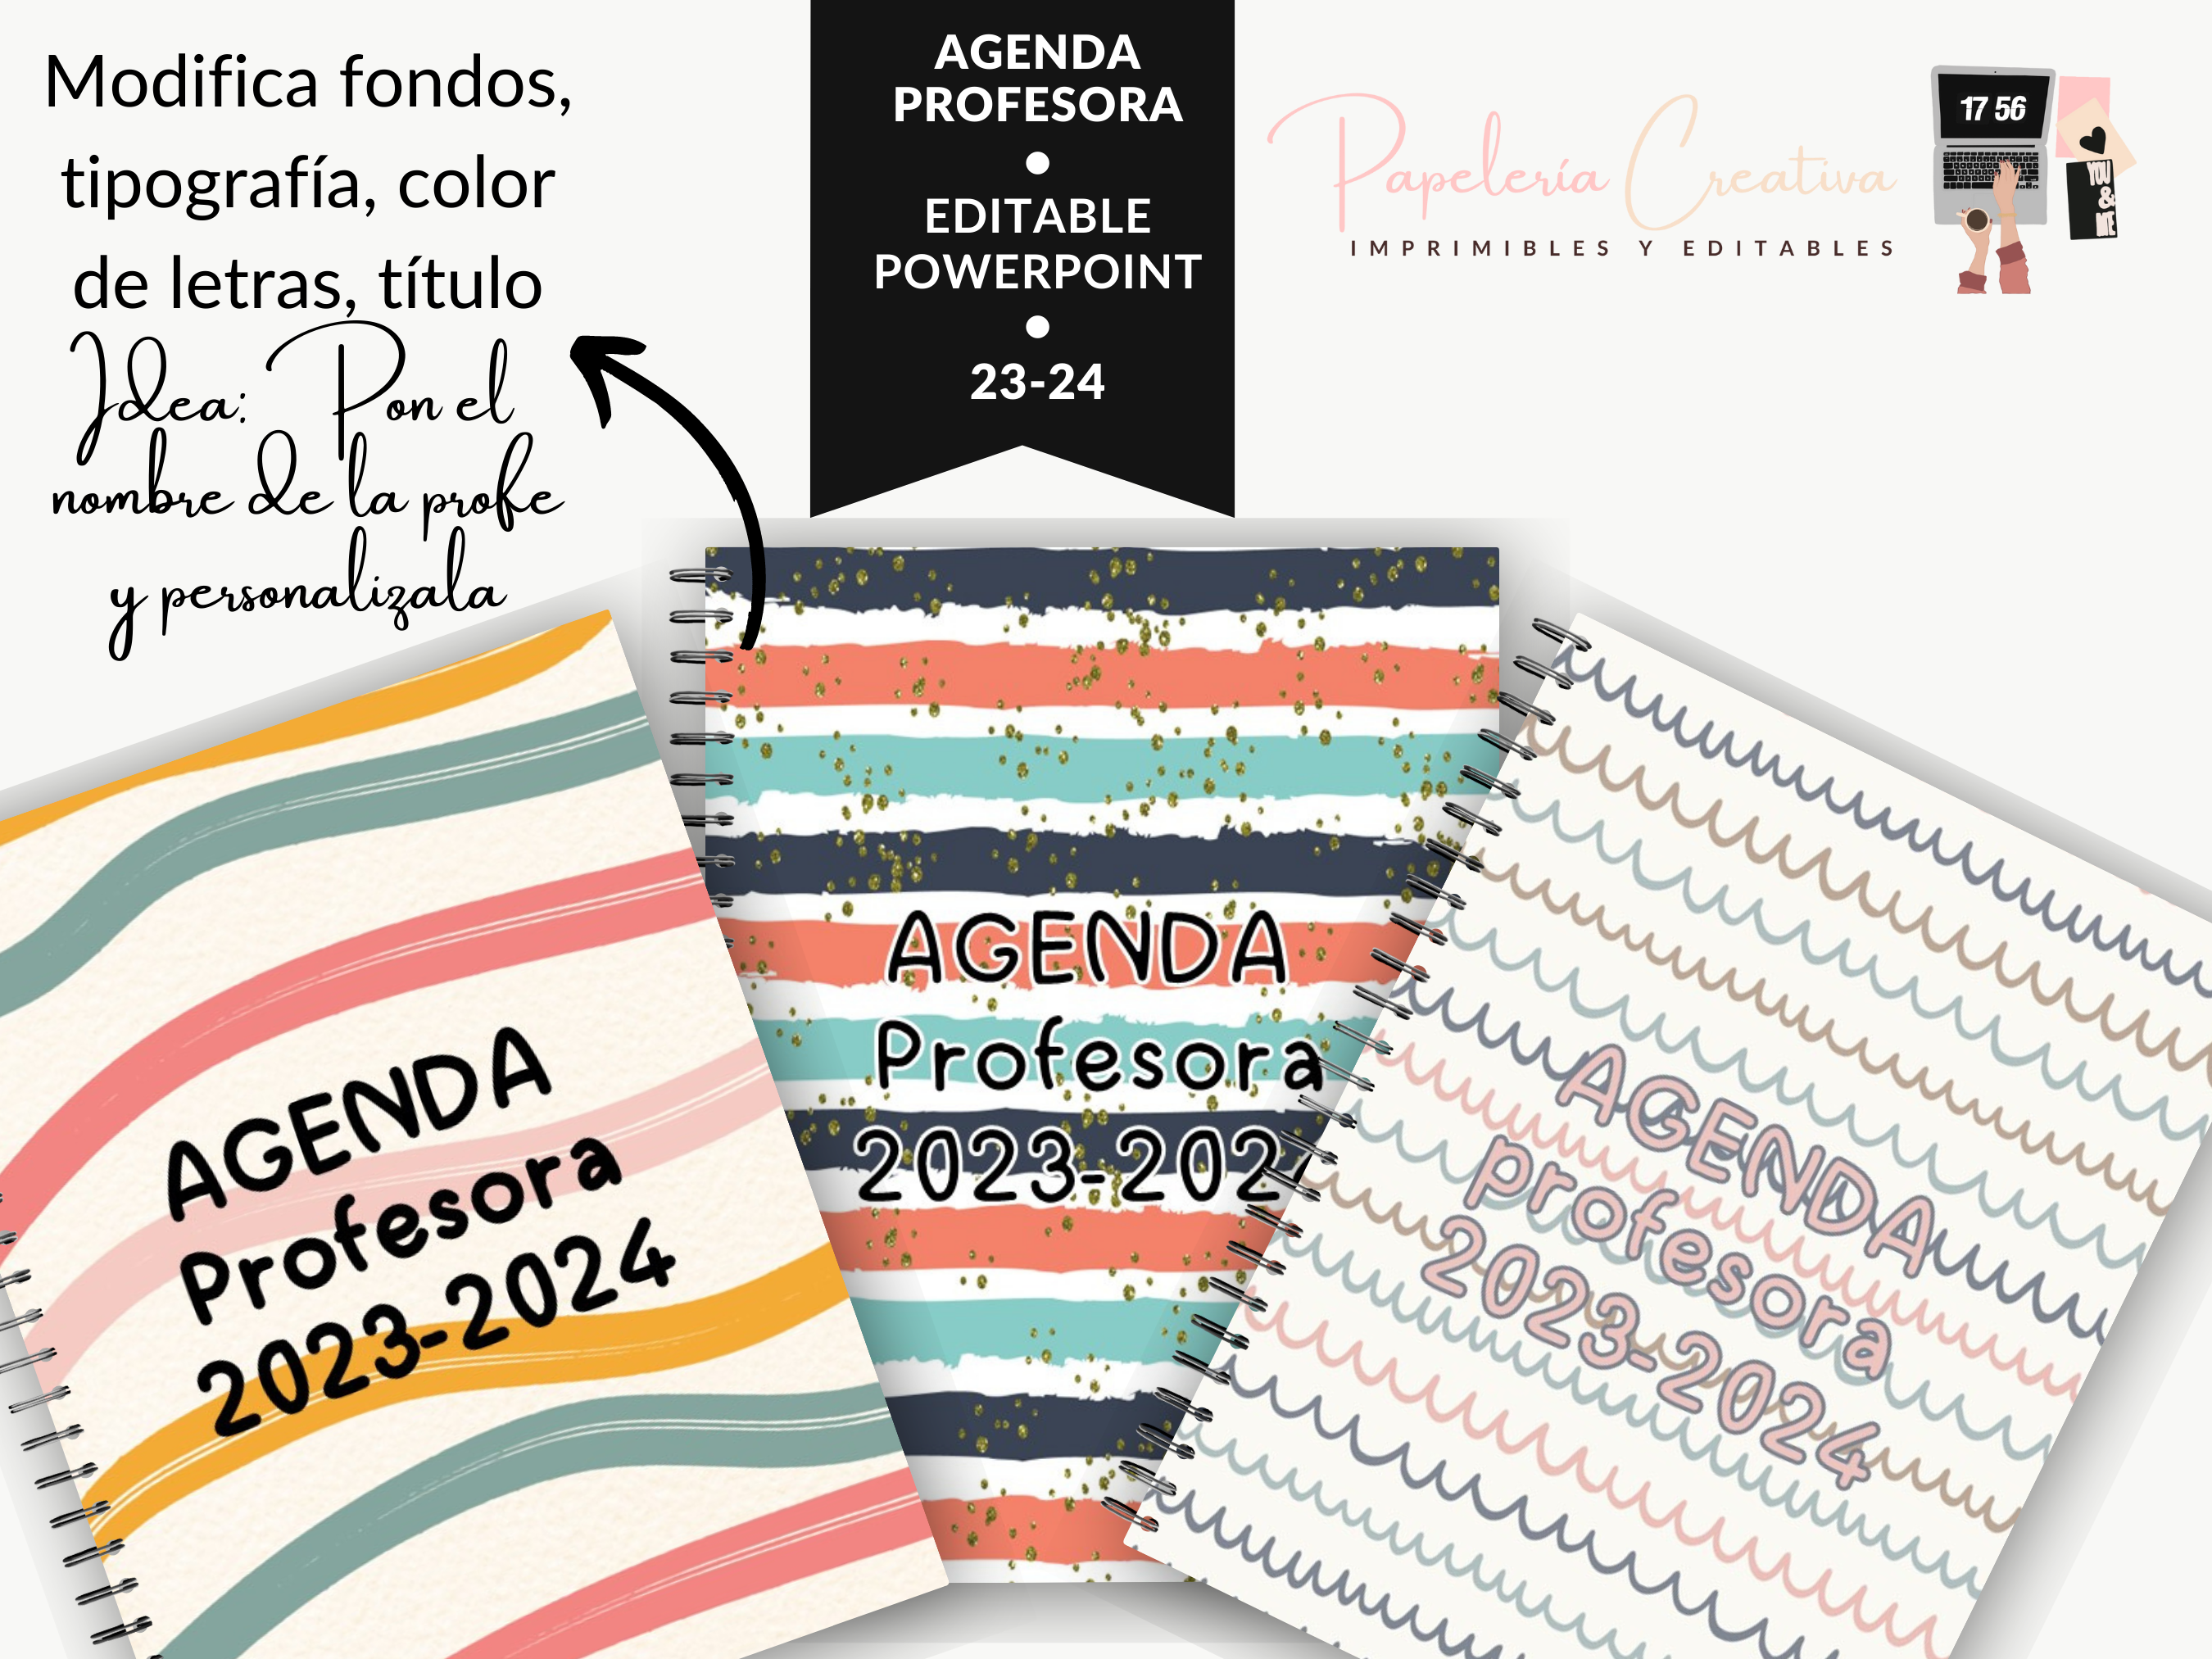 AGENDA, PROFESORA, 2023, 2024, EDITABLE, IMPRIMIBLE, POWERPOINT